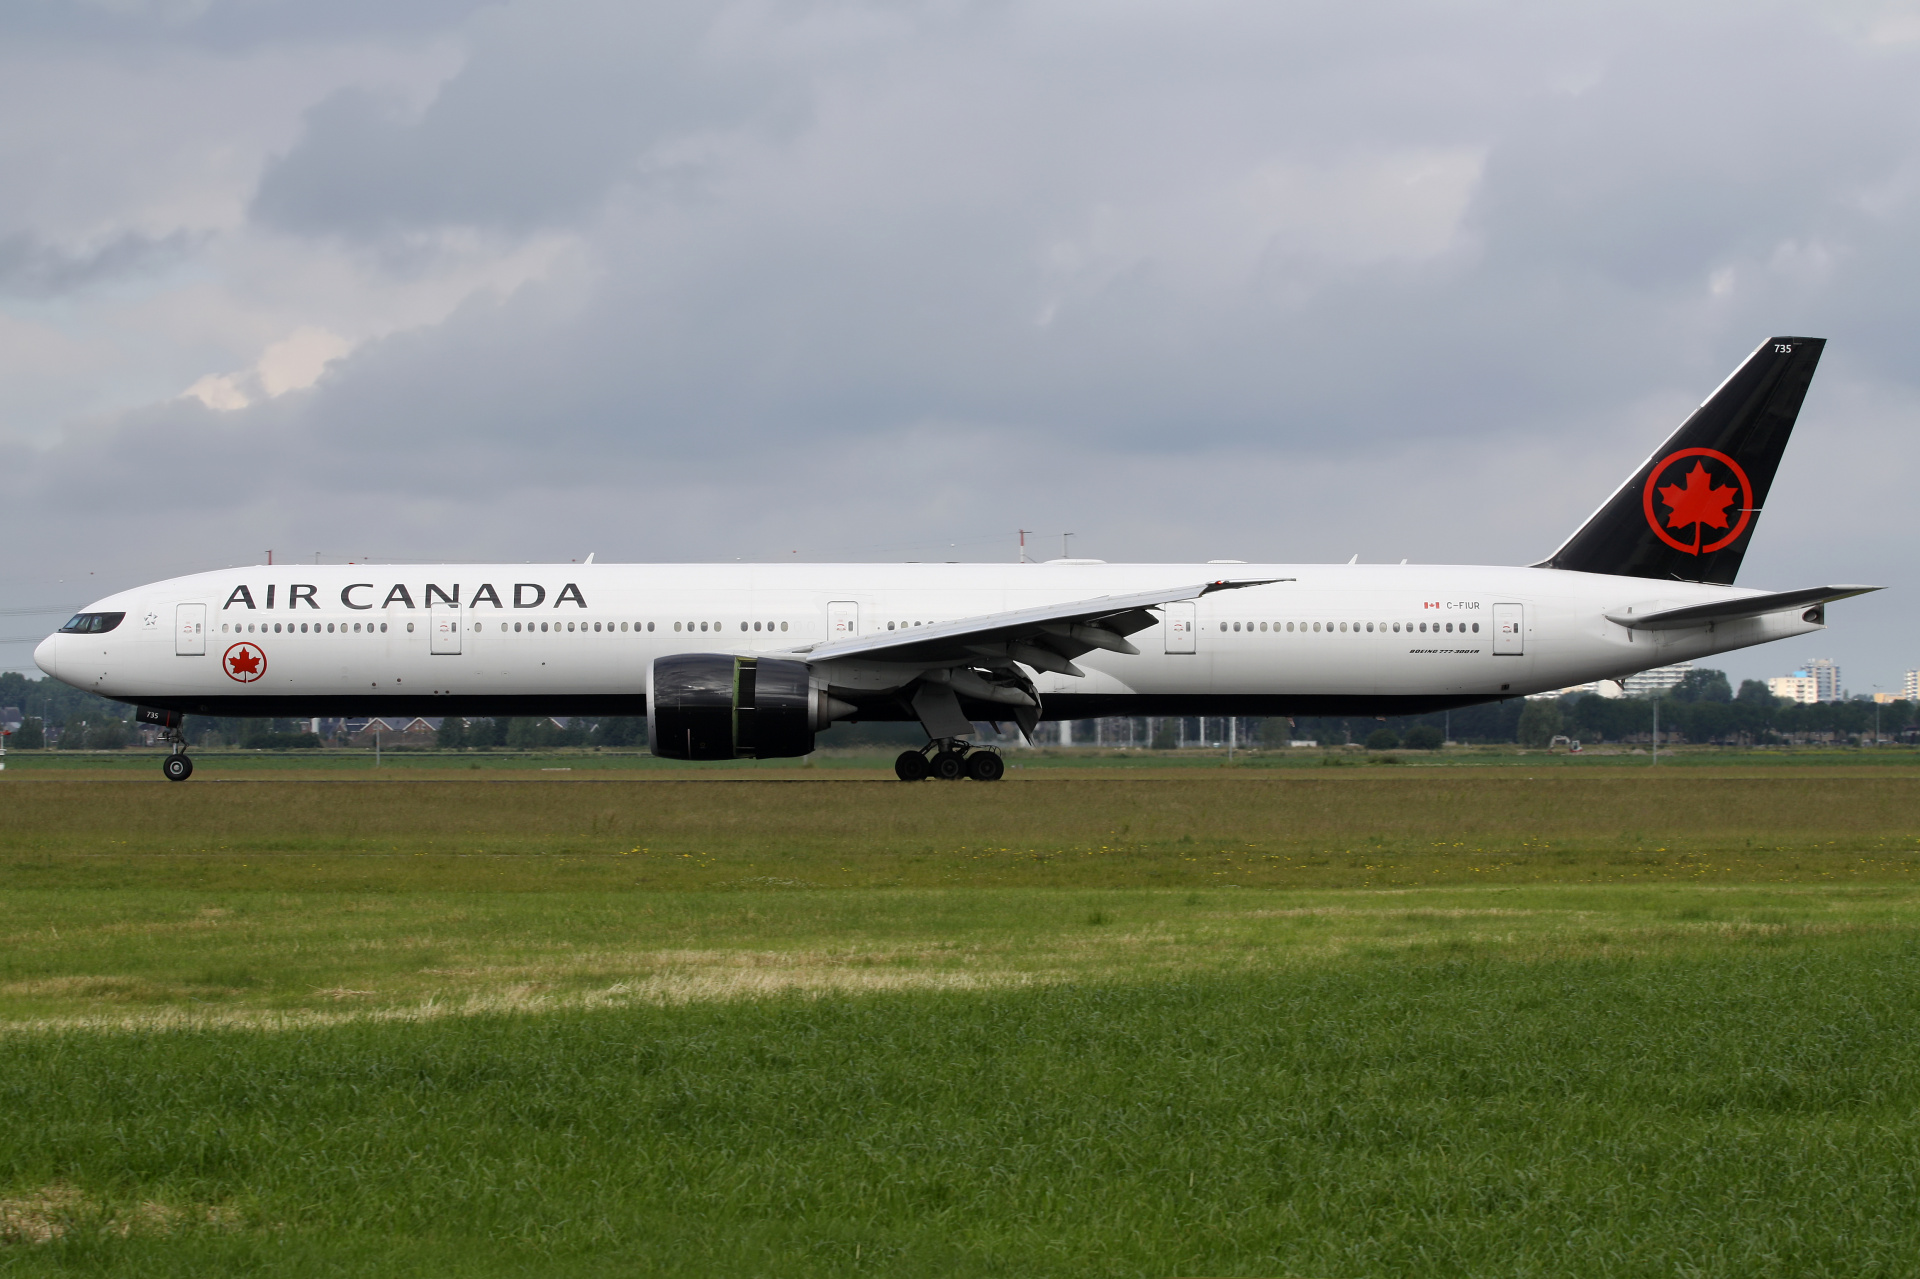 C-FIUR, Air Canada (Aircraft » Schiphol Spotting » Boeing 777-300ER)